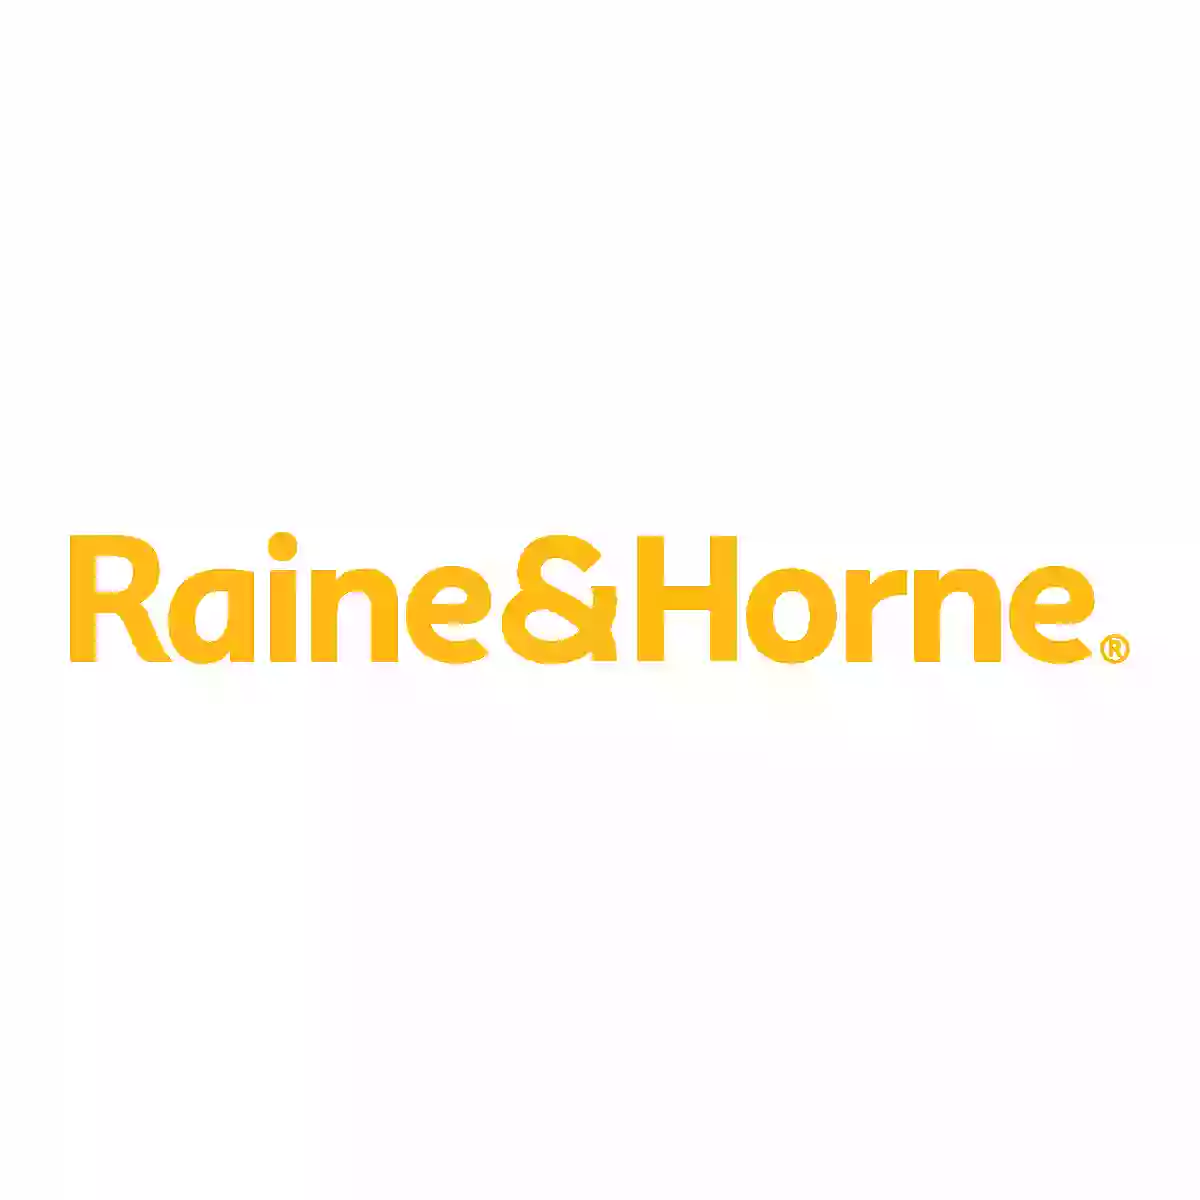 Raine & Horne Tauranga - NRG Realty Ltd